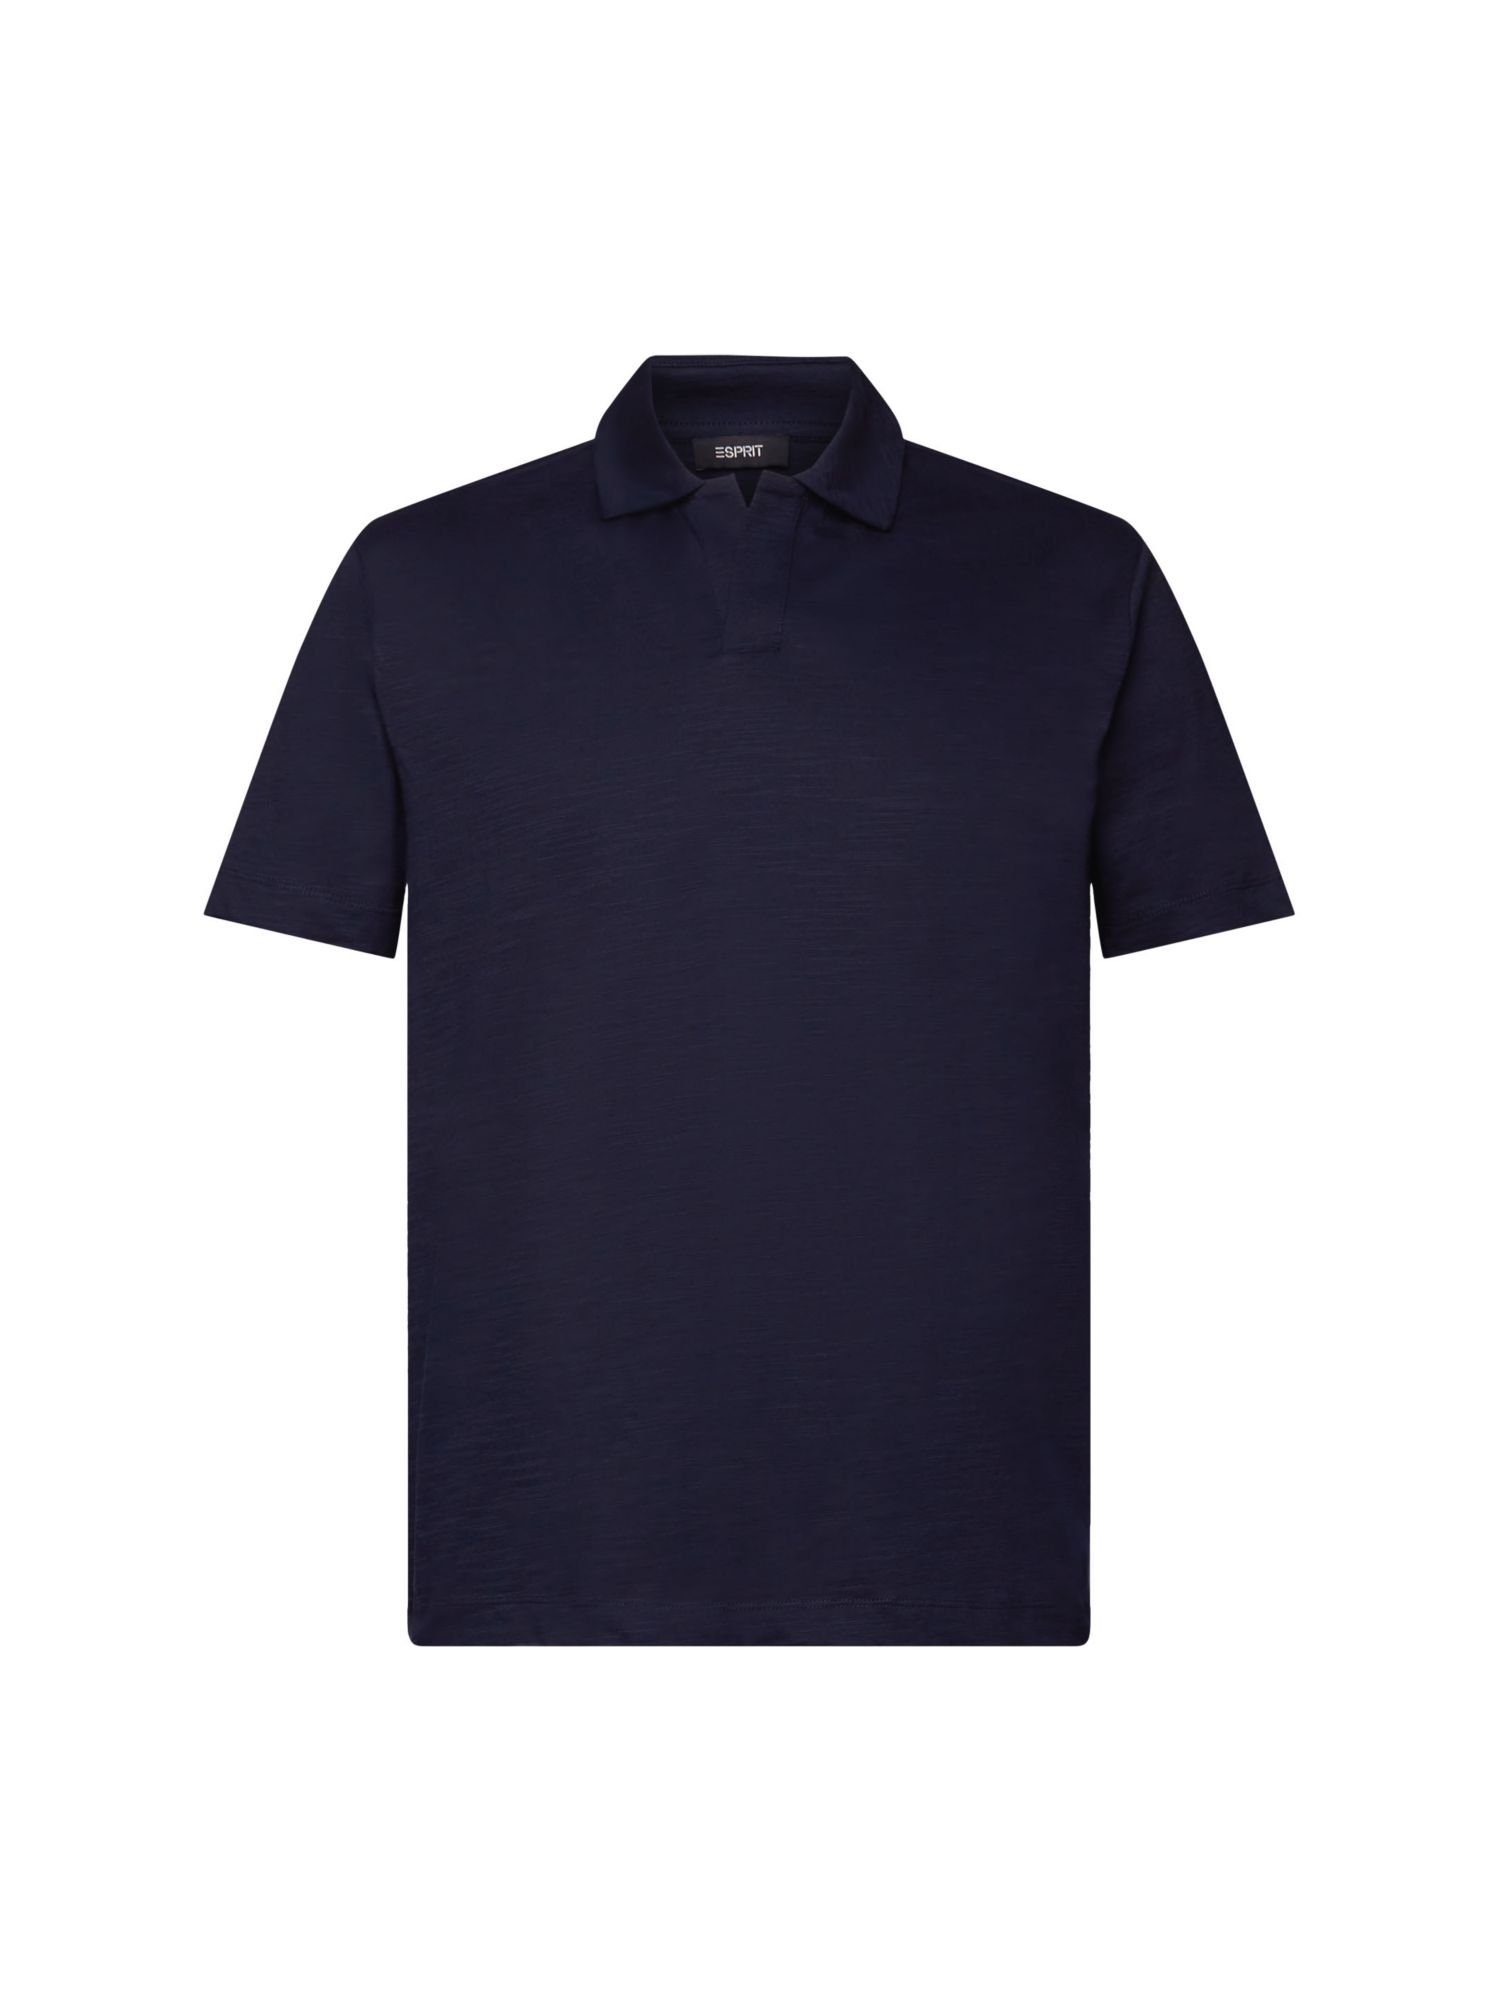 Esprit Collection Poloshirt Poloshirt aus Baumwolle NAVY Jersey, % 100